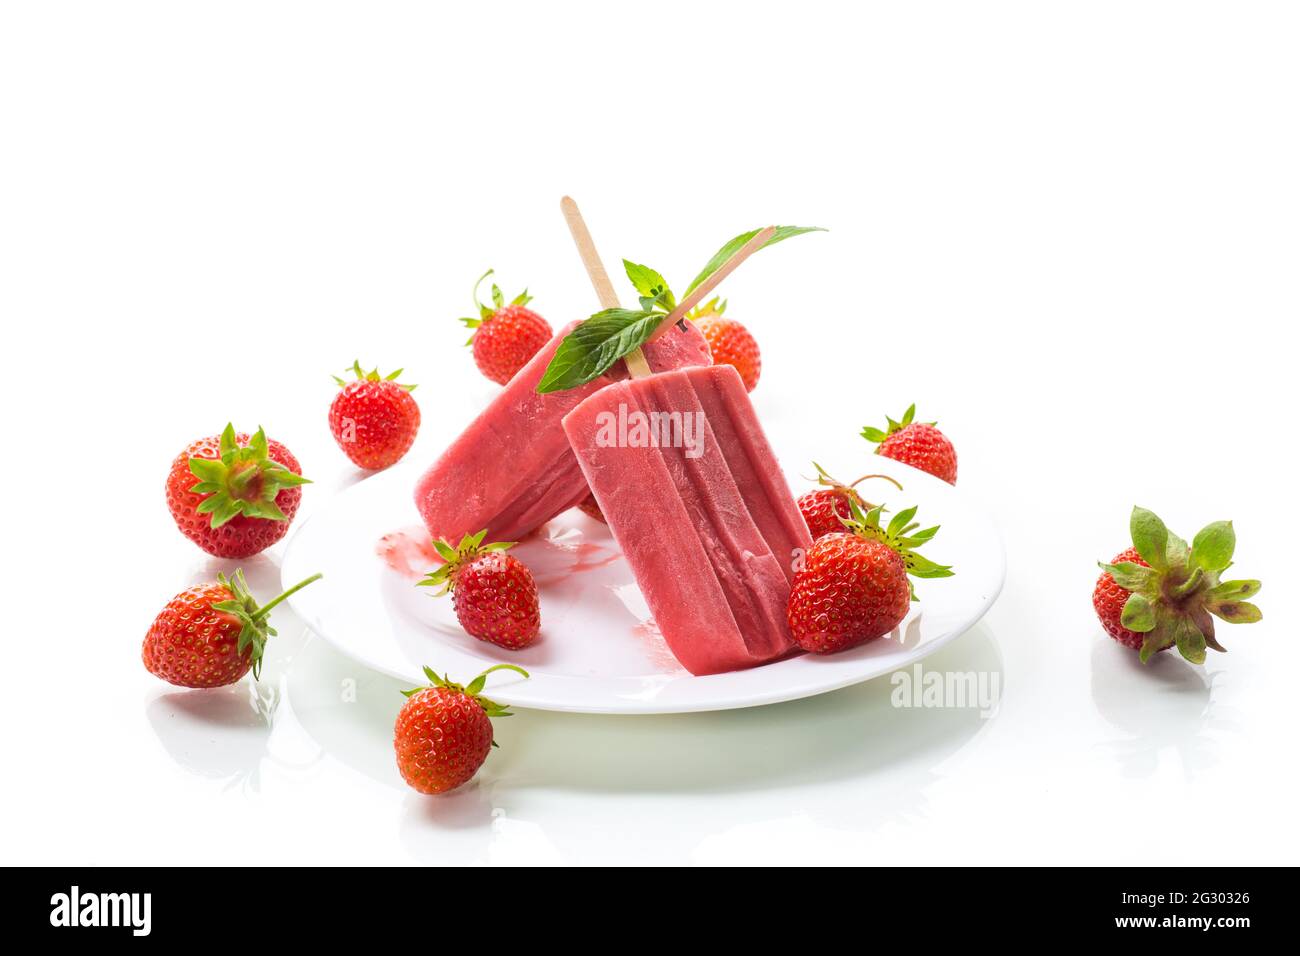 https://c8.alamy.com/compes/2g30326/helado-de-fresa-casero-en-un-baston-hecho-de-fresas-frescas-en-un-plato-aislado-sobre-fondo-blanco-2g30326.jpg